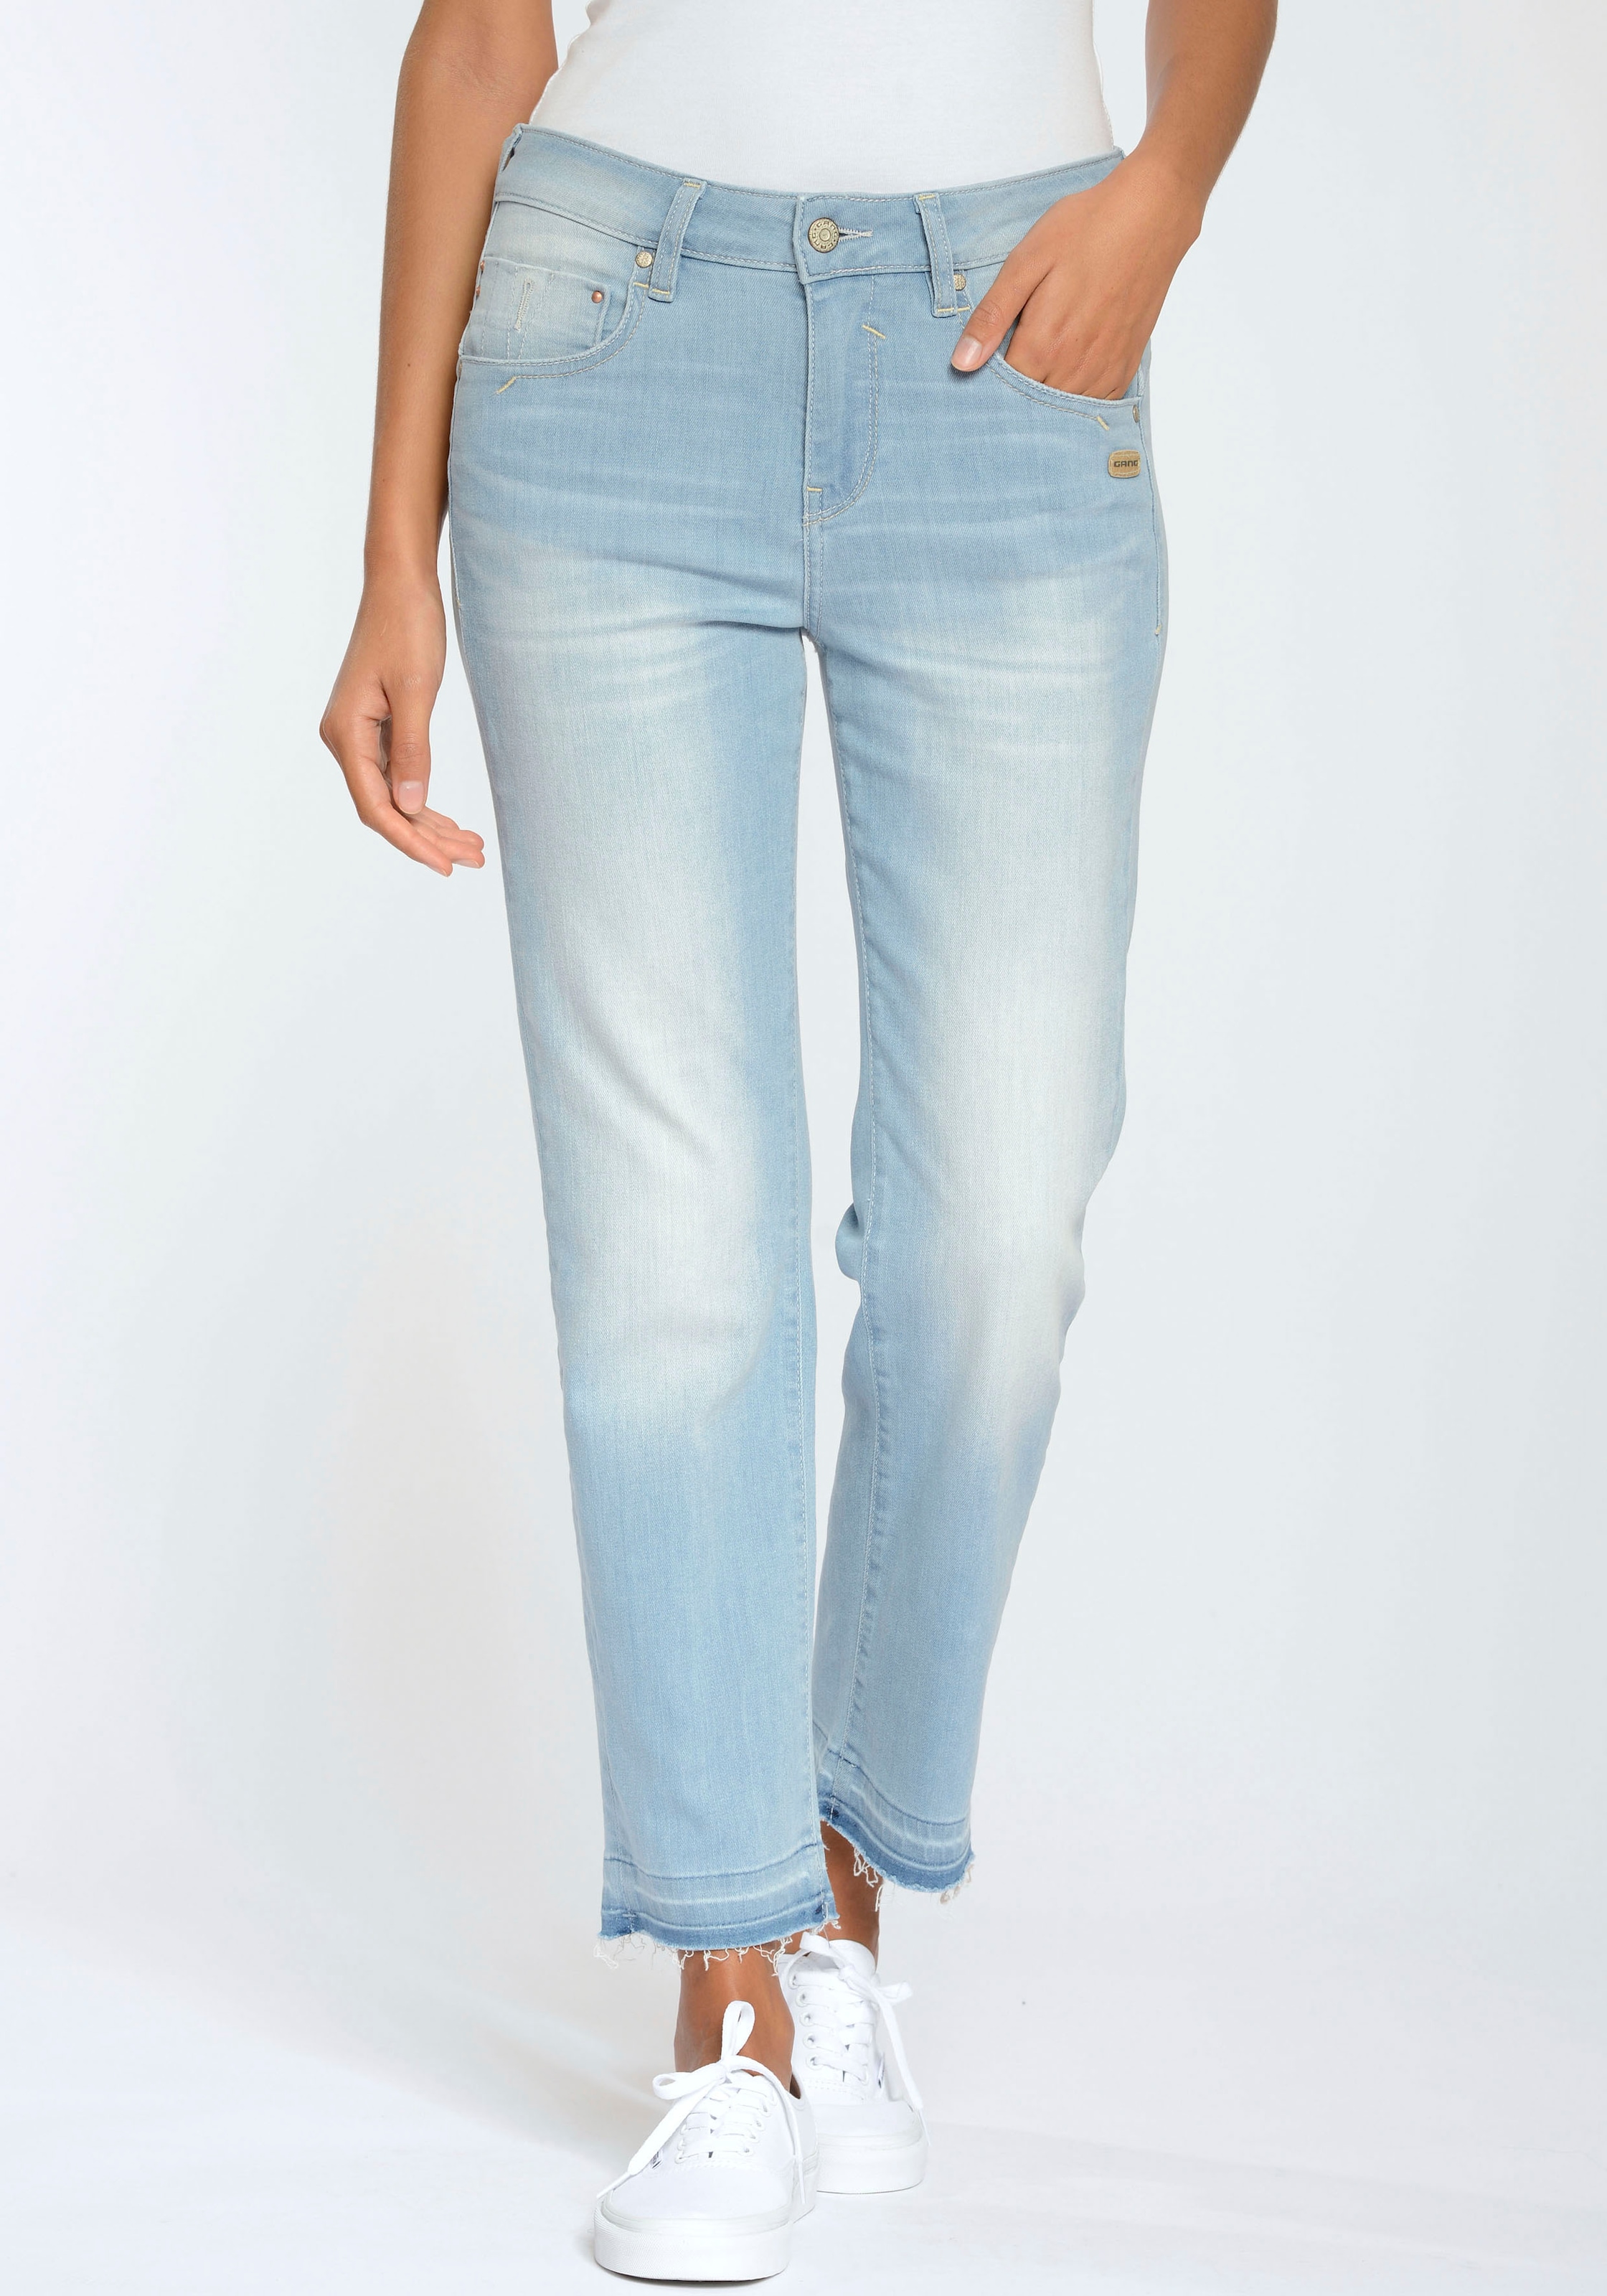 »94RUBINIA Straight-Jeans perfekter durch Elasthan-A kaufen CROPPED«, GANG Sitz